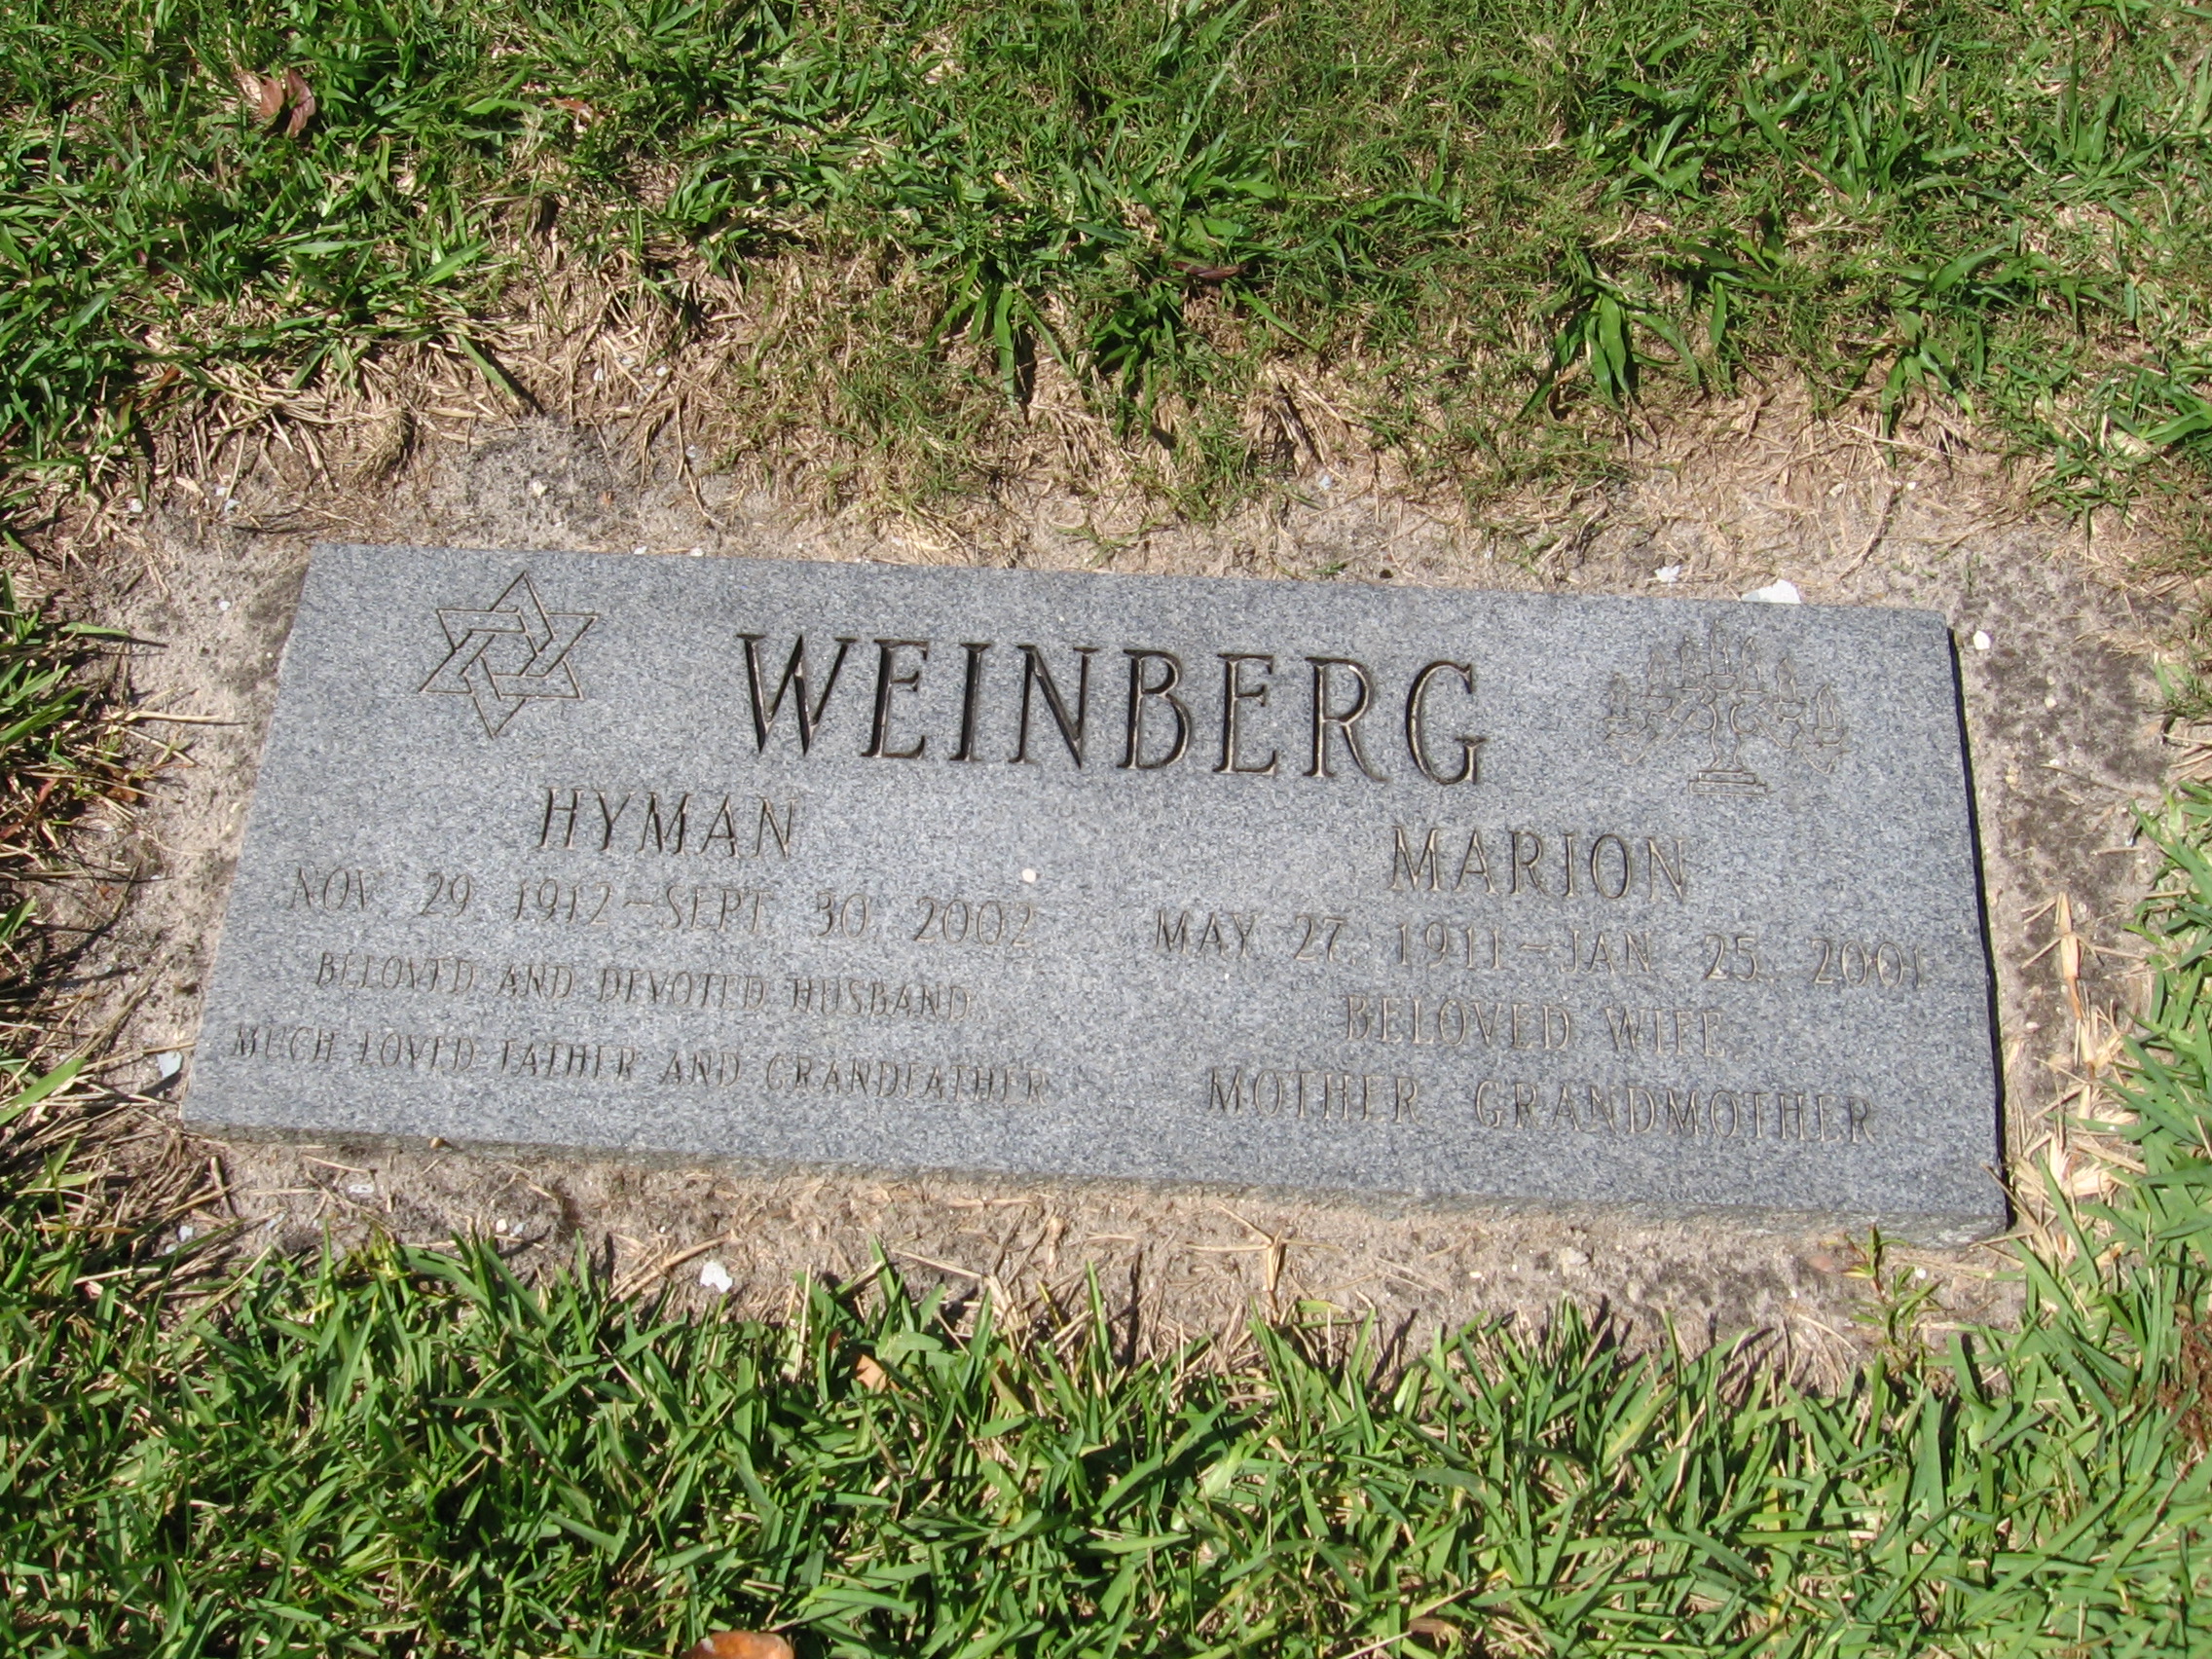 Hyman Weinberg